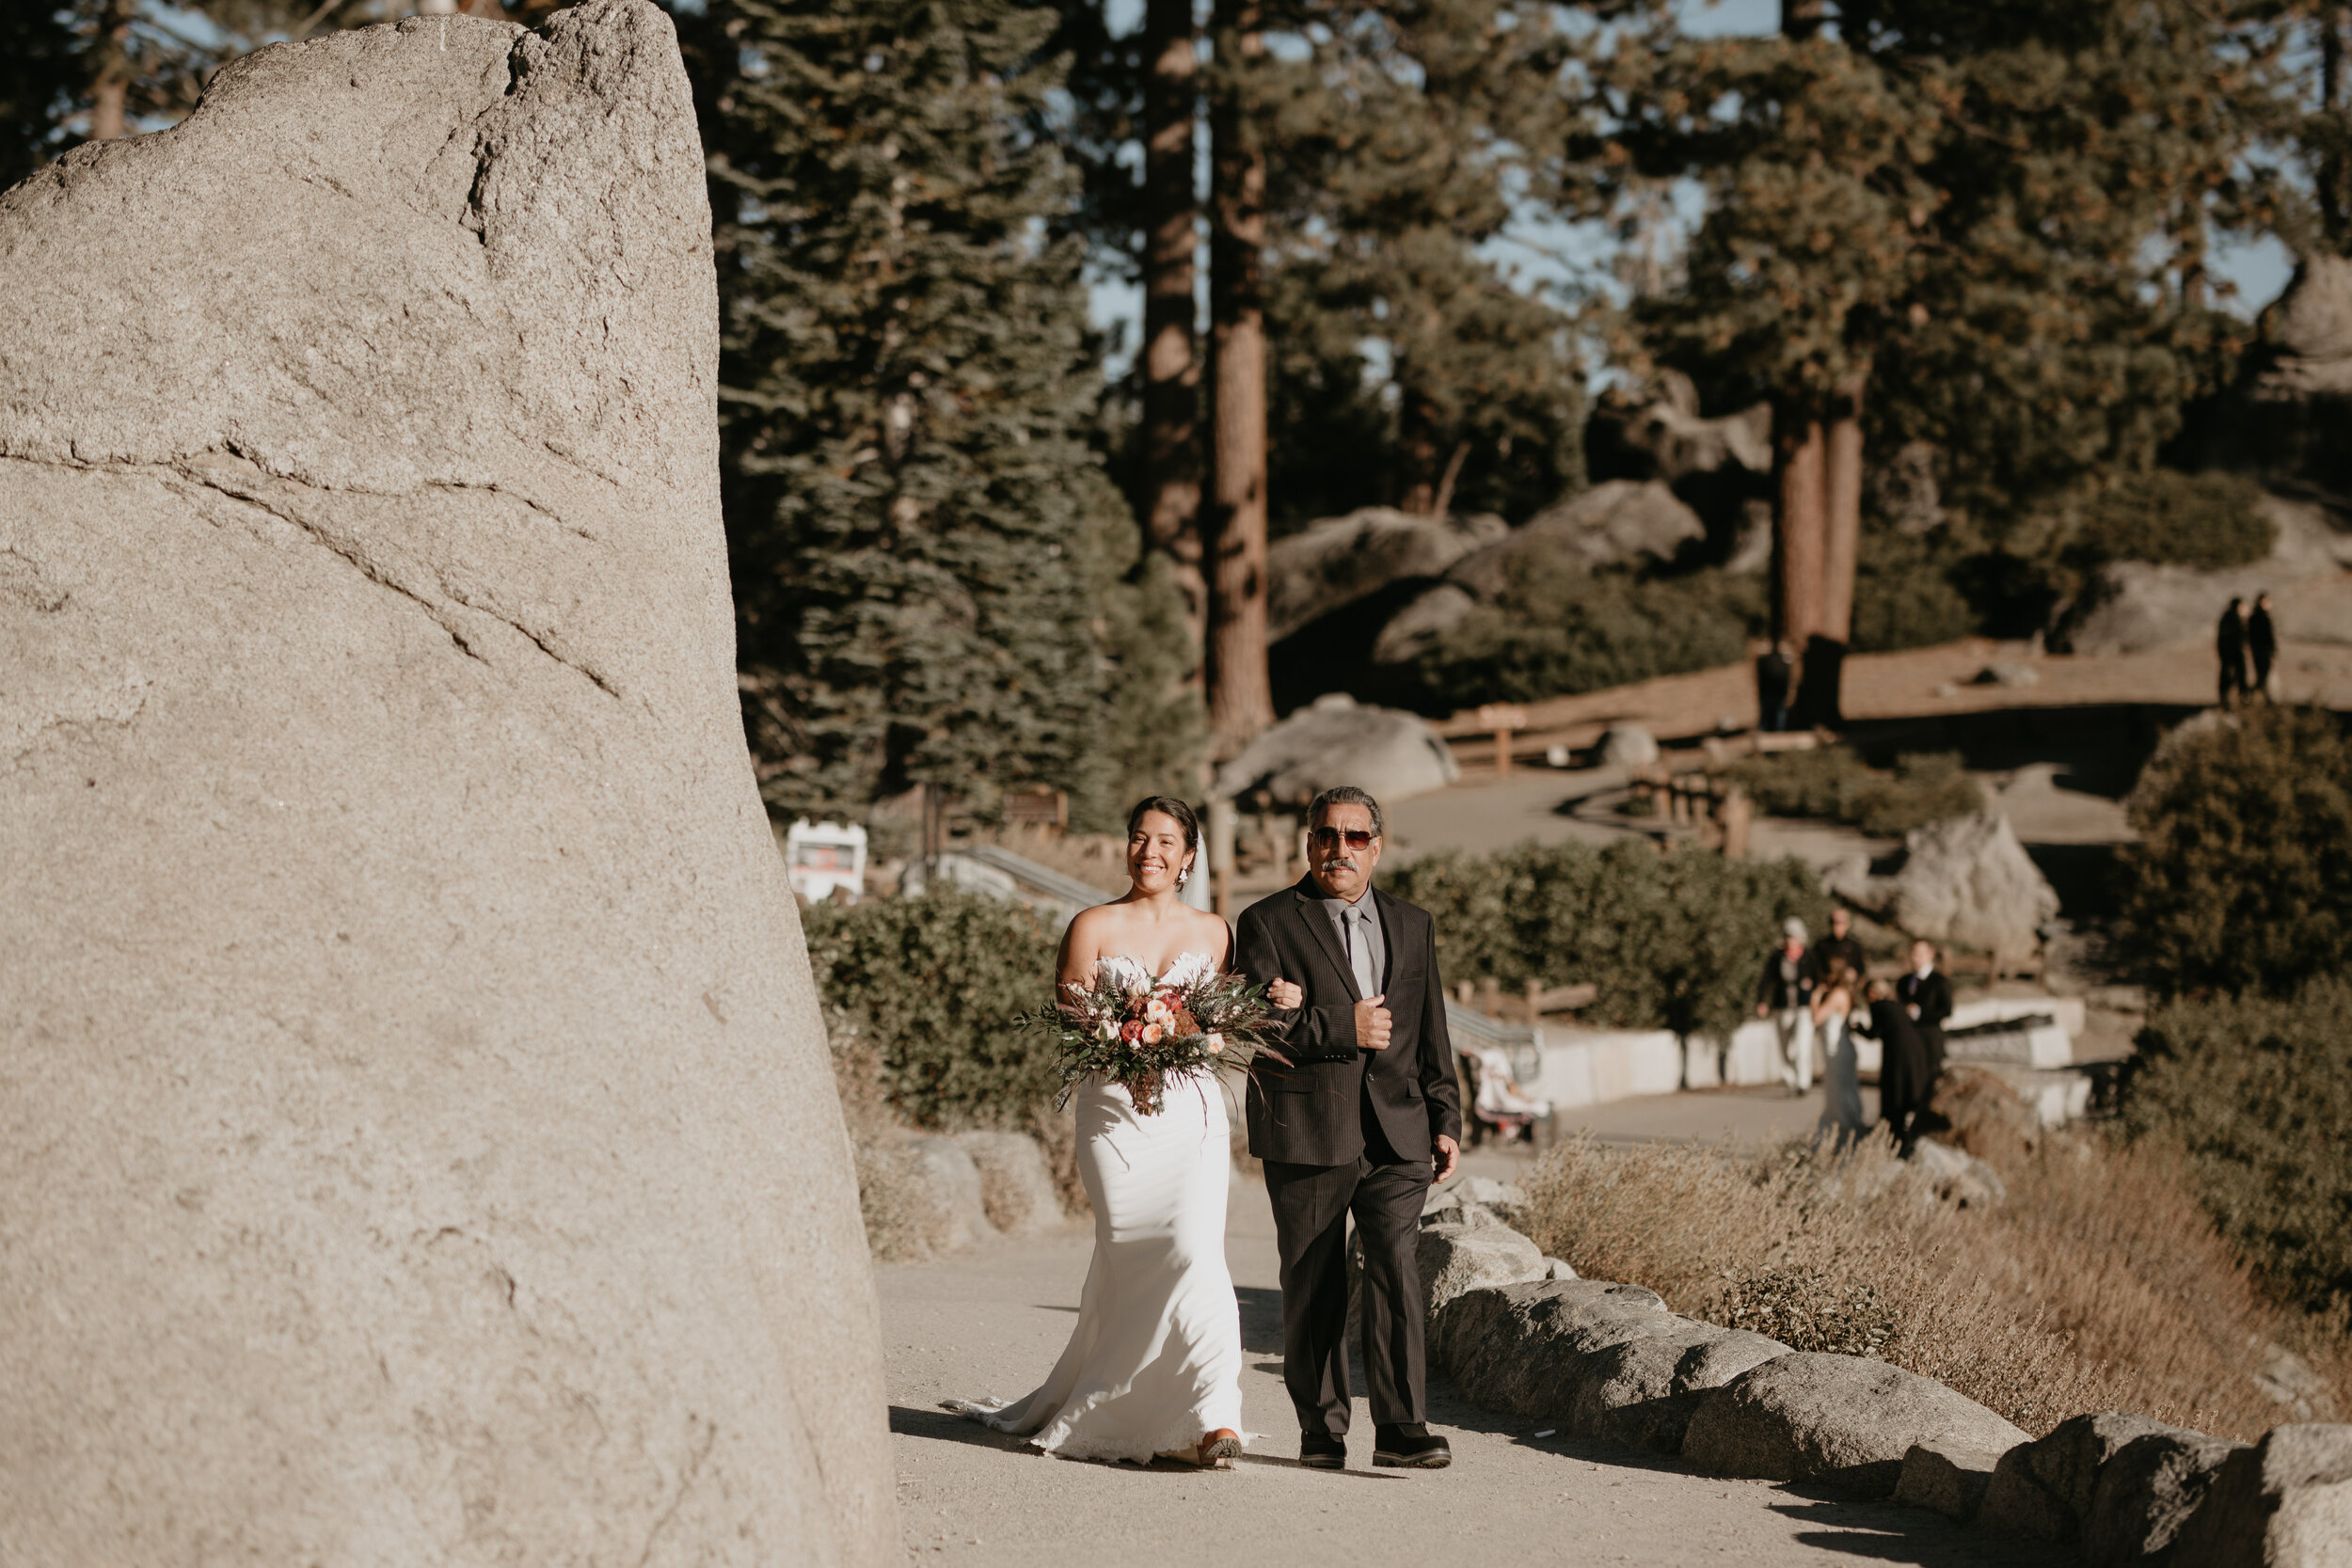 Nicole-Daacke-Photography-yosemite-national-park-elopement-photography-adventure-elopement-in-yosemite-taft-point-sunset-elopement-photographs-california-intimate-destination-wedding-in-yosemite-national-park-6193.jpg